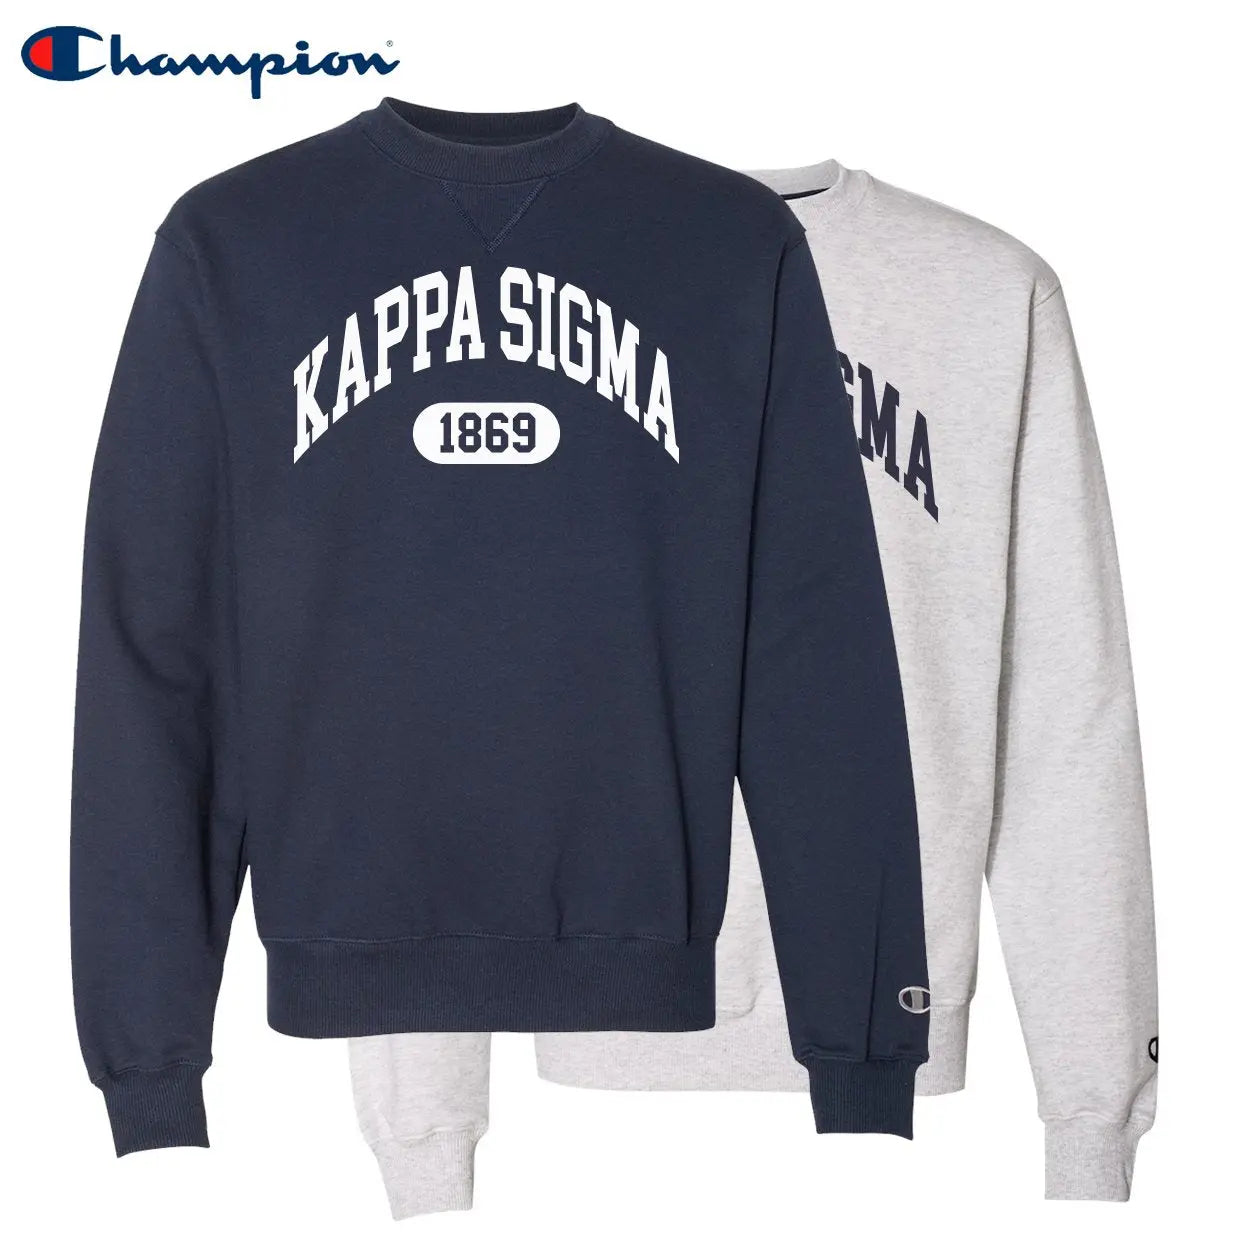 Kappa Sig Champion Crewneck Sweatshirt – Kappa Sigma Official Store